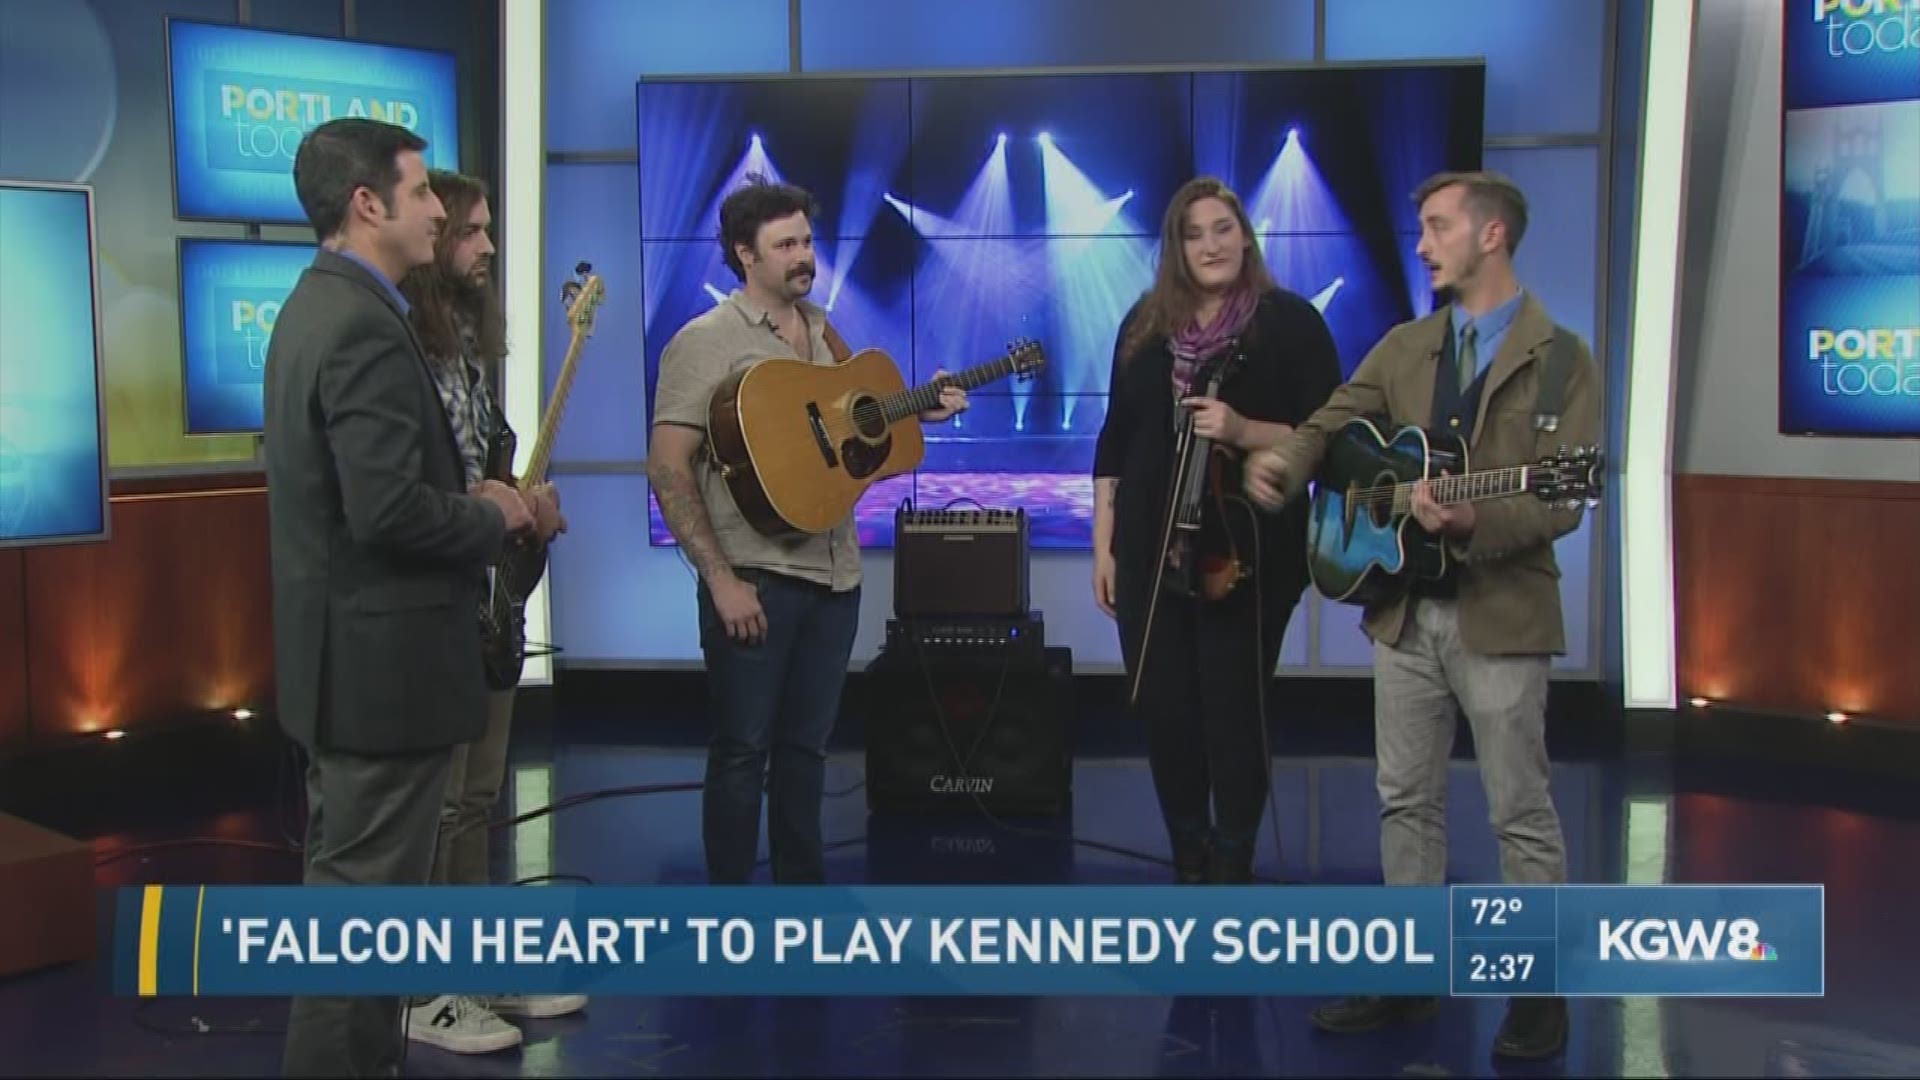  'Falcon Heart' to play Kennedy school